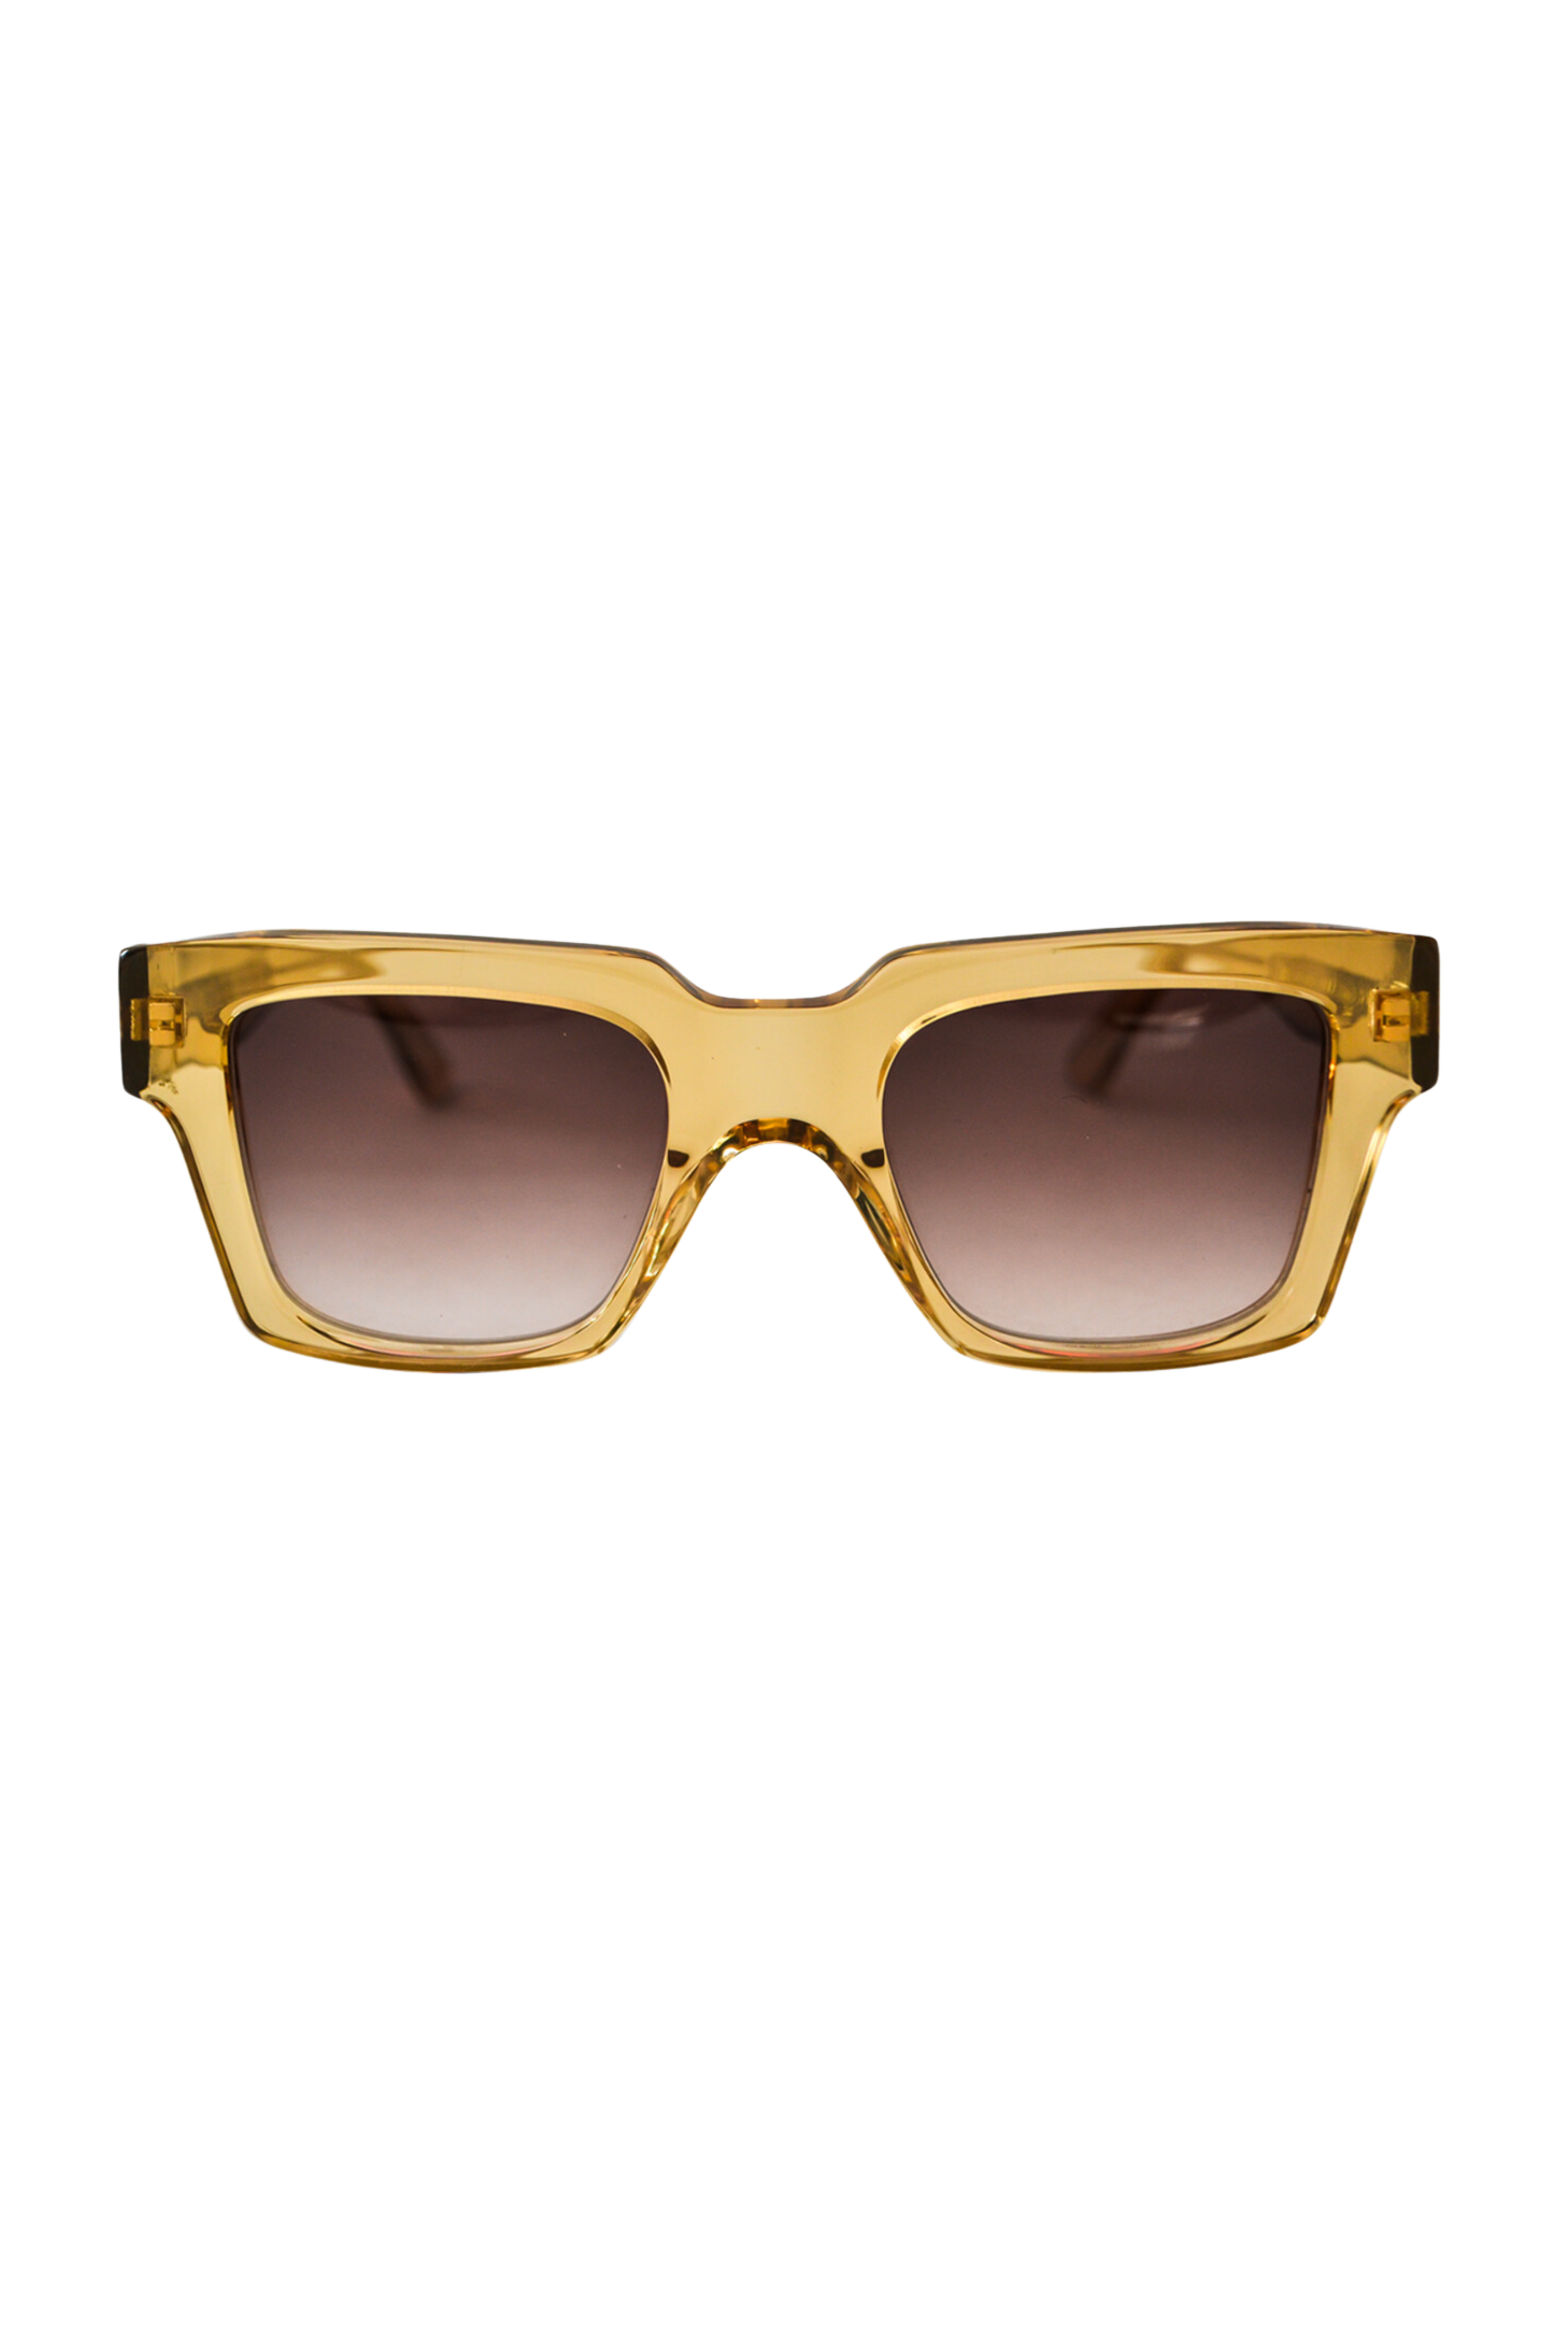 KIMEZE Mahi Yellow Gold Crystal Sunglasses